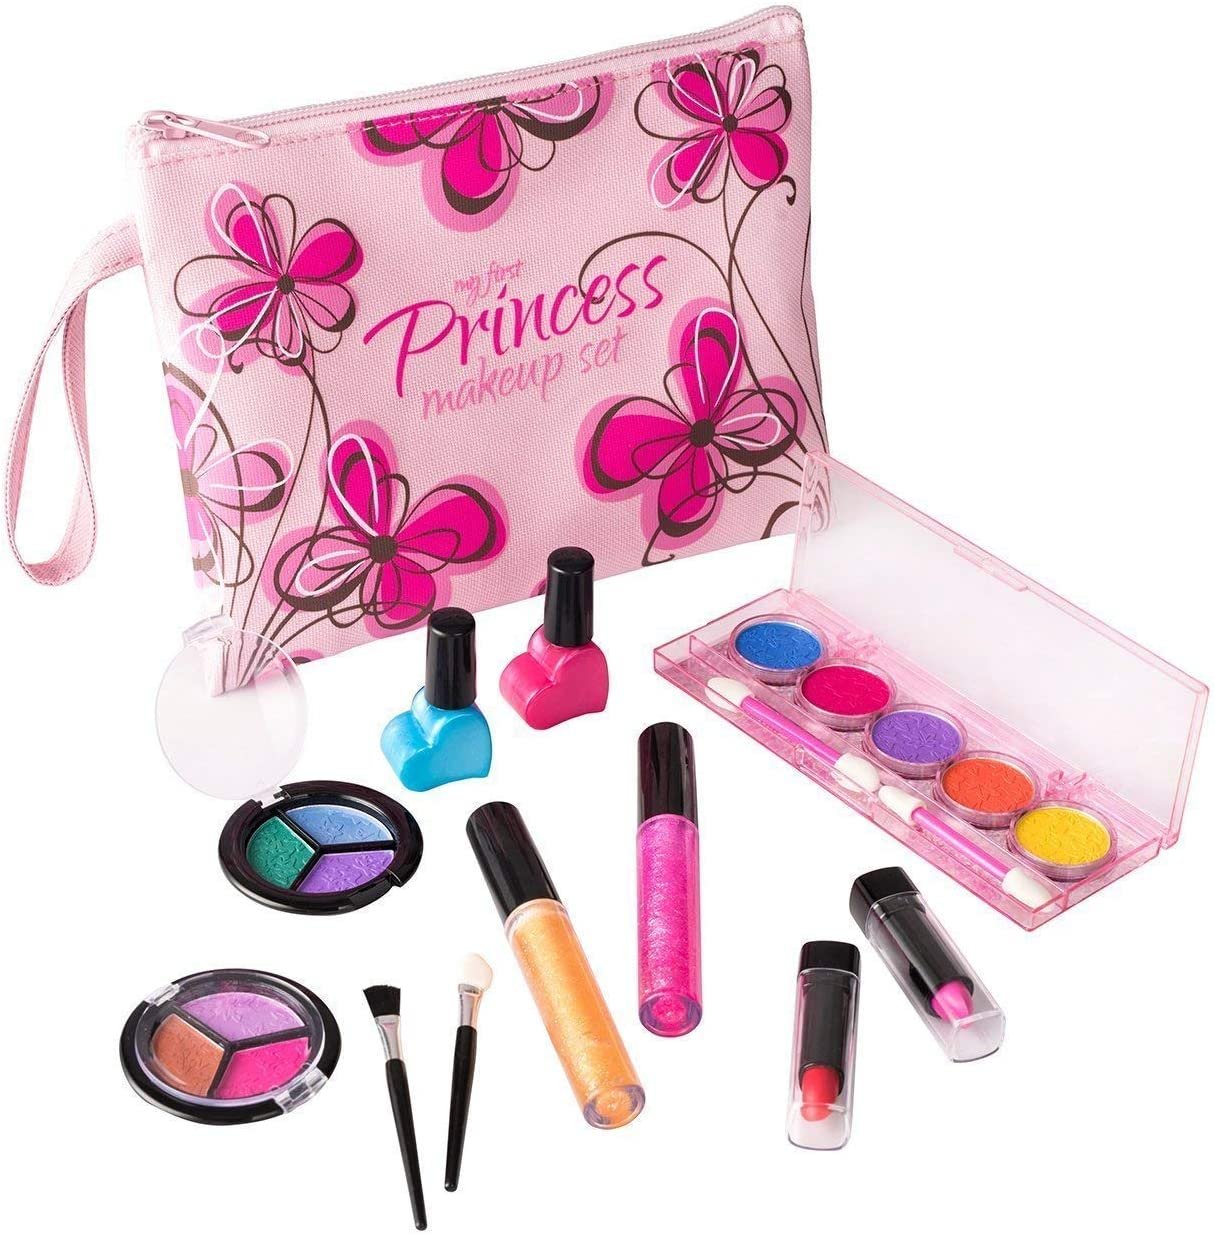 Playkidz Real Washable Play Make Up Set for Princess - Kids Makeup Kit for Girls Non Toxic - Full Makeup Dress Up Set with Bag. 11 PC - image 1 of 7